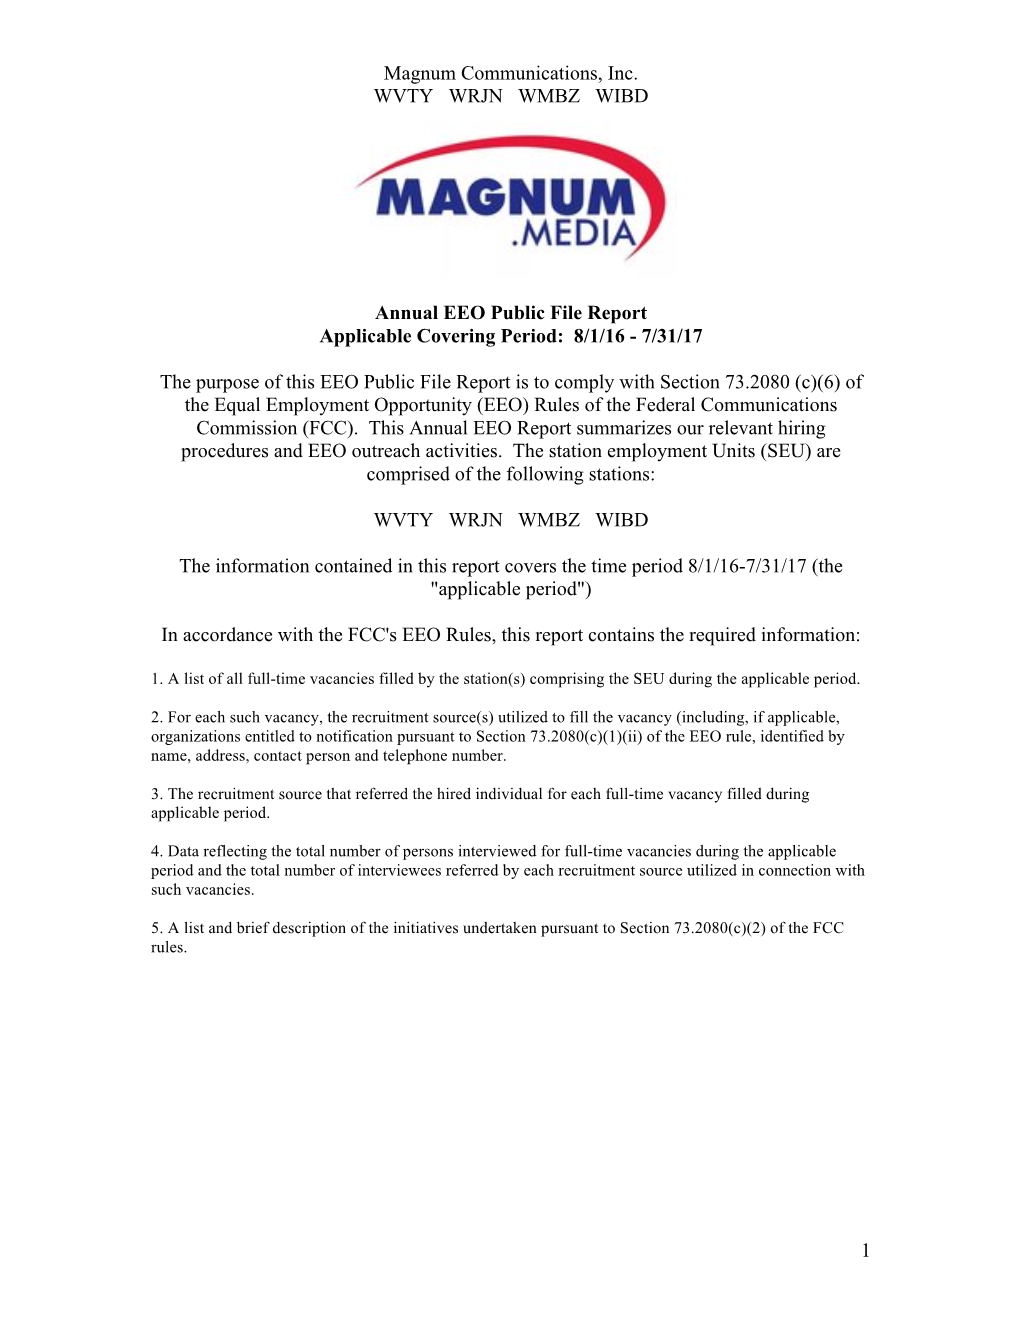 Magnum Communications, Inc. WVTY WRJN WMBZ WIBD 1 Annual